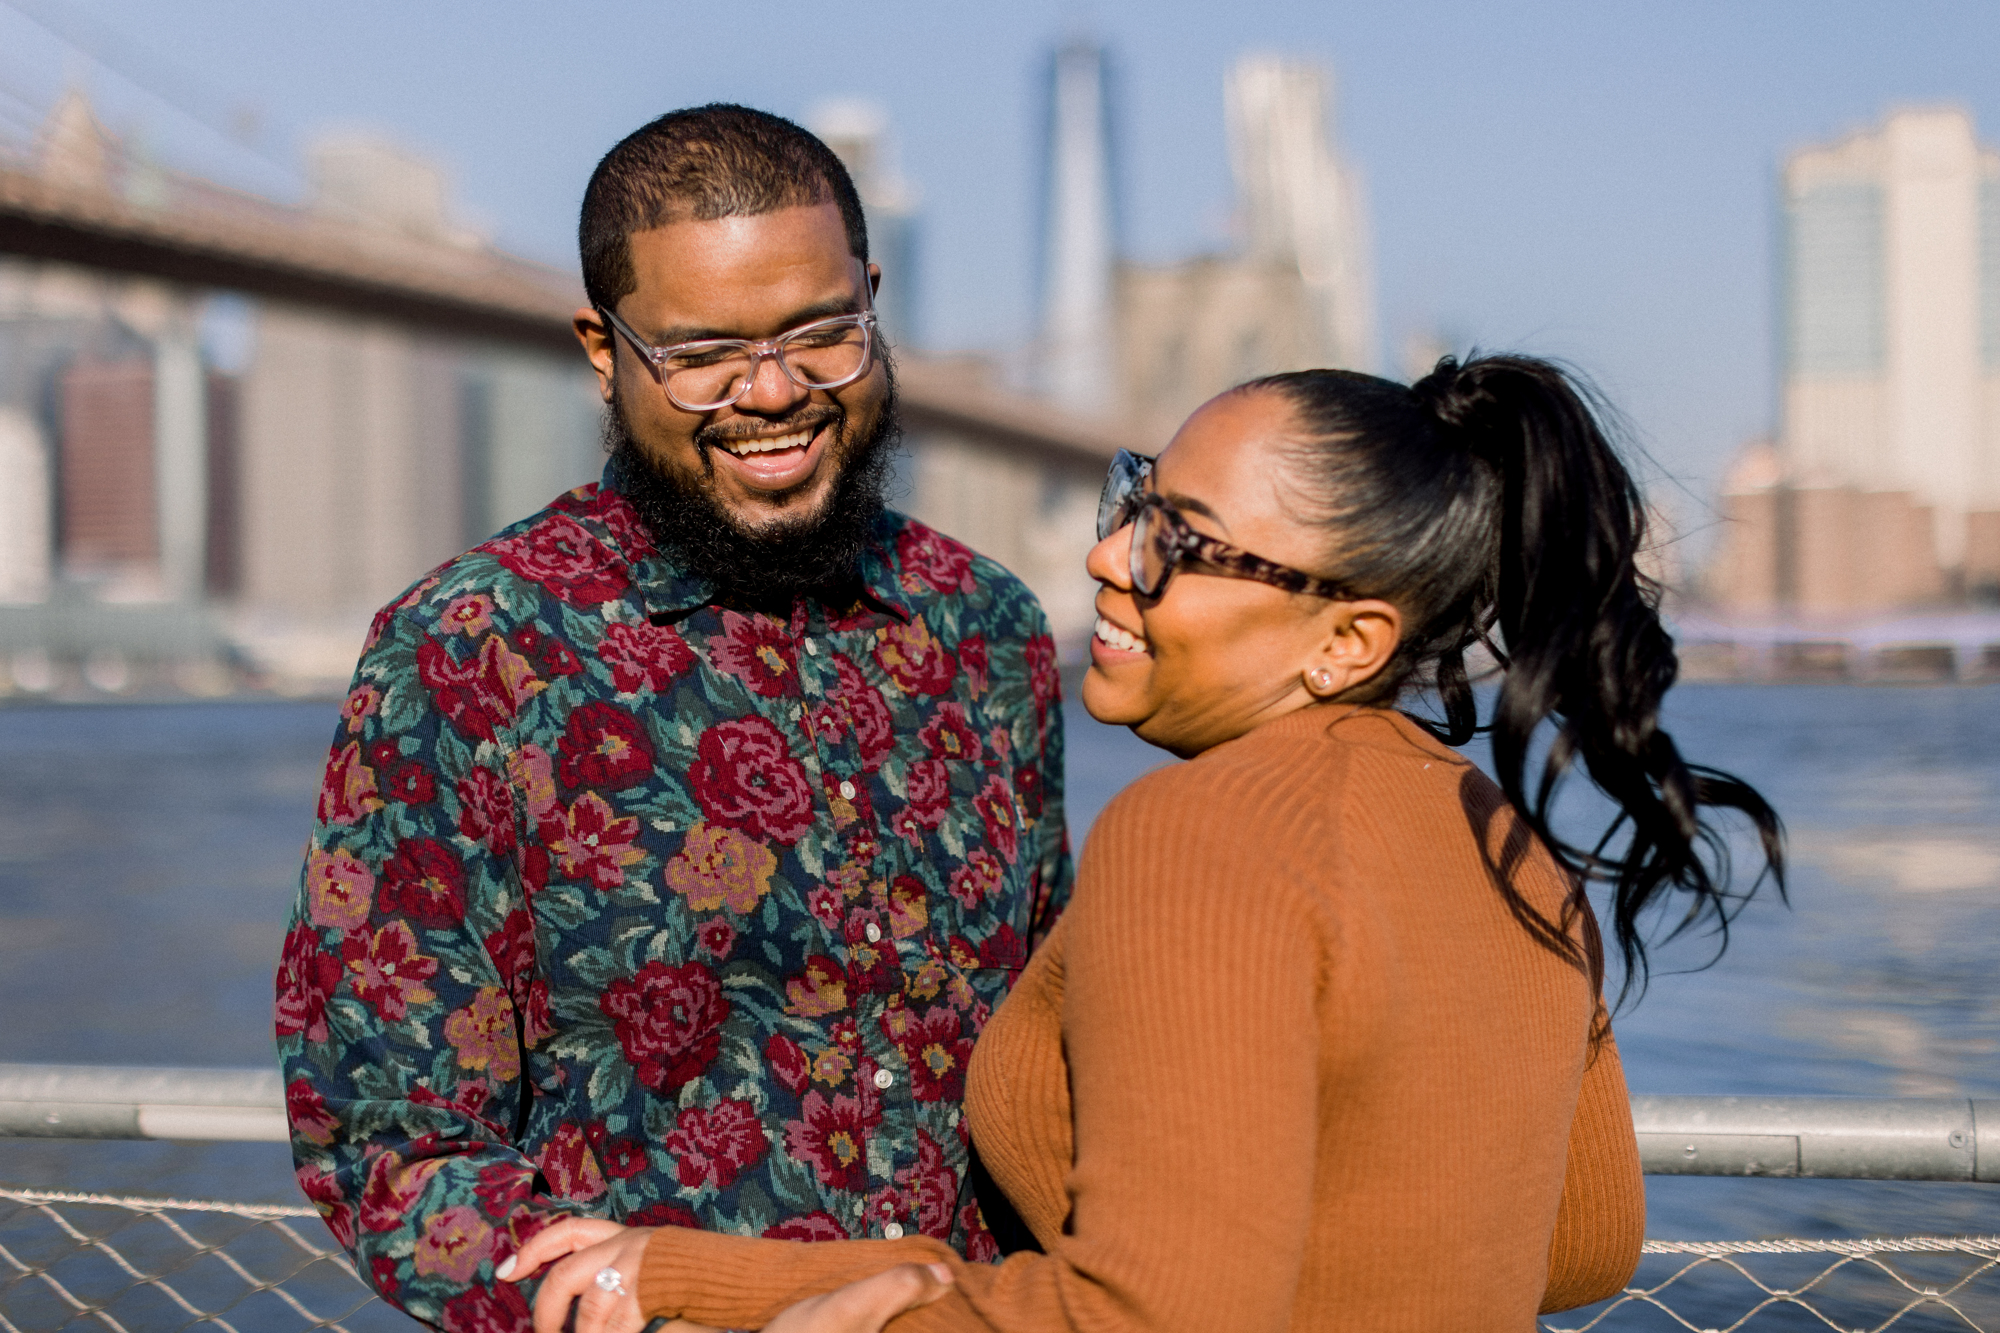 Joyful Autumn DUMBO Engagement Photography at the Brooklyn Bridge